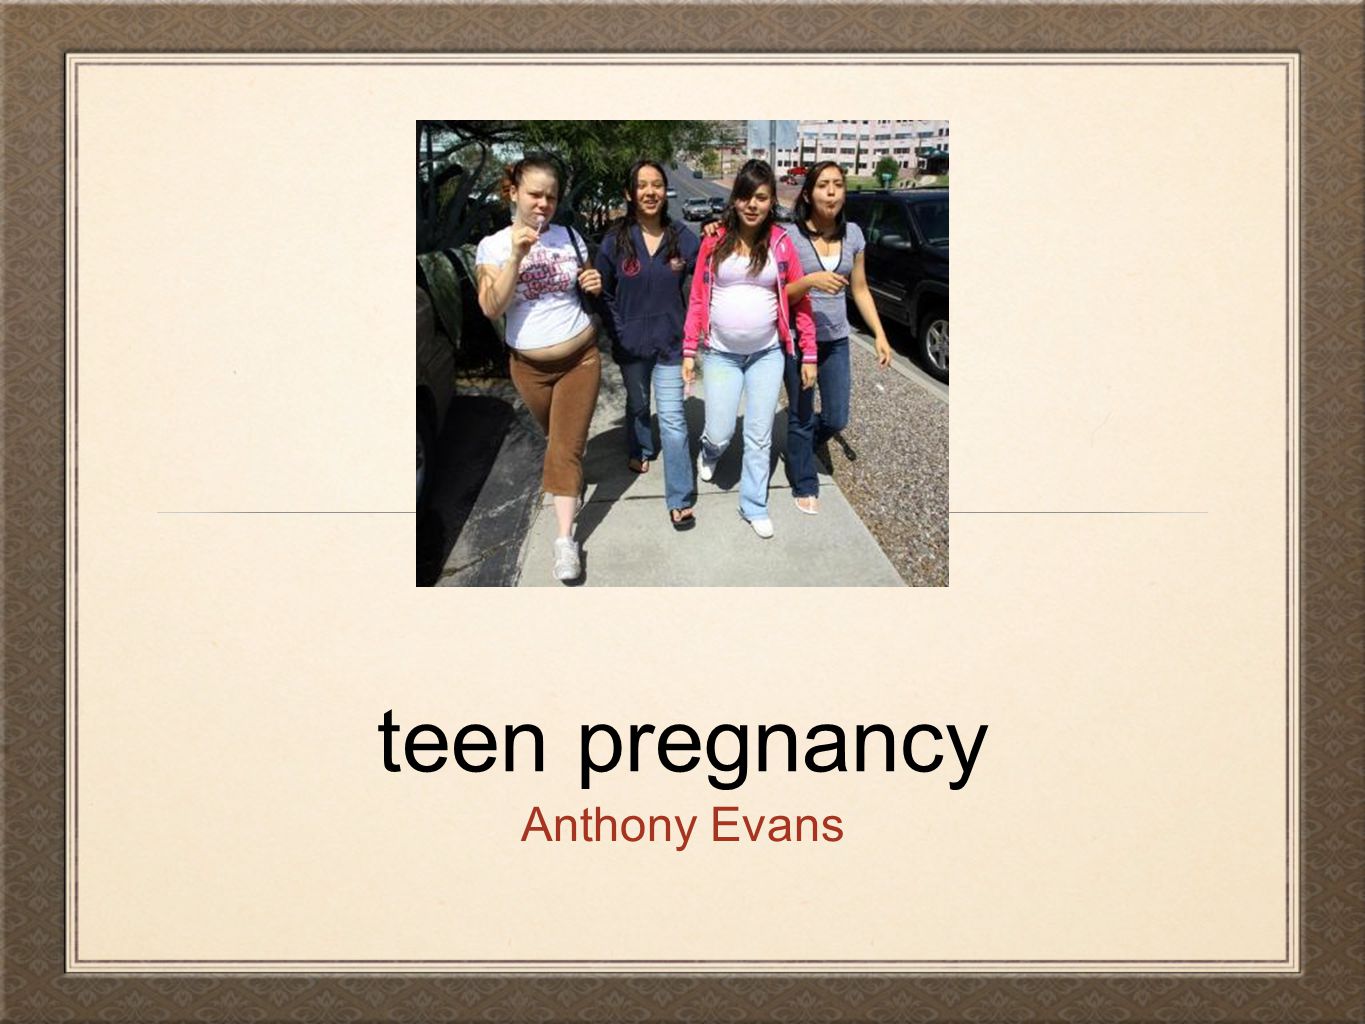 teen pregnancy Anthony Evans